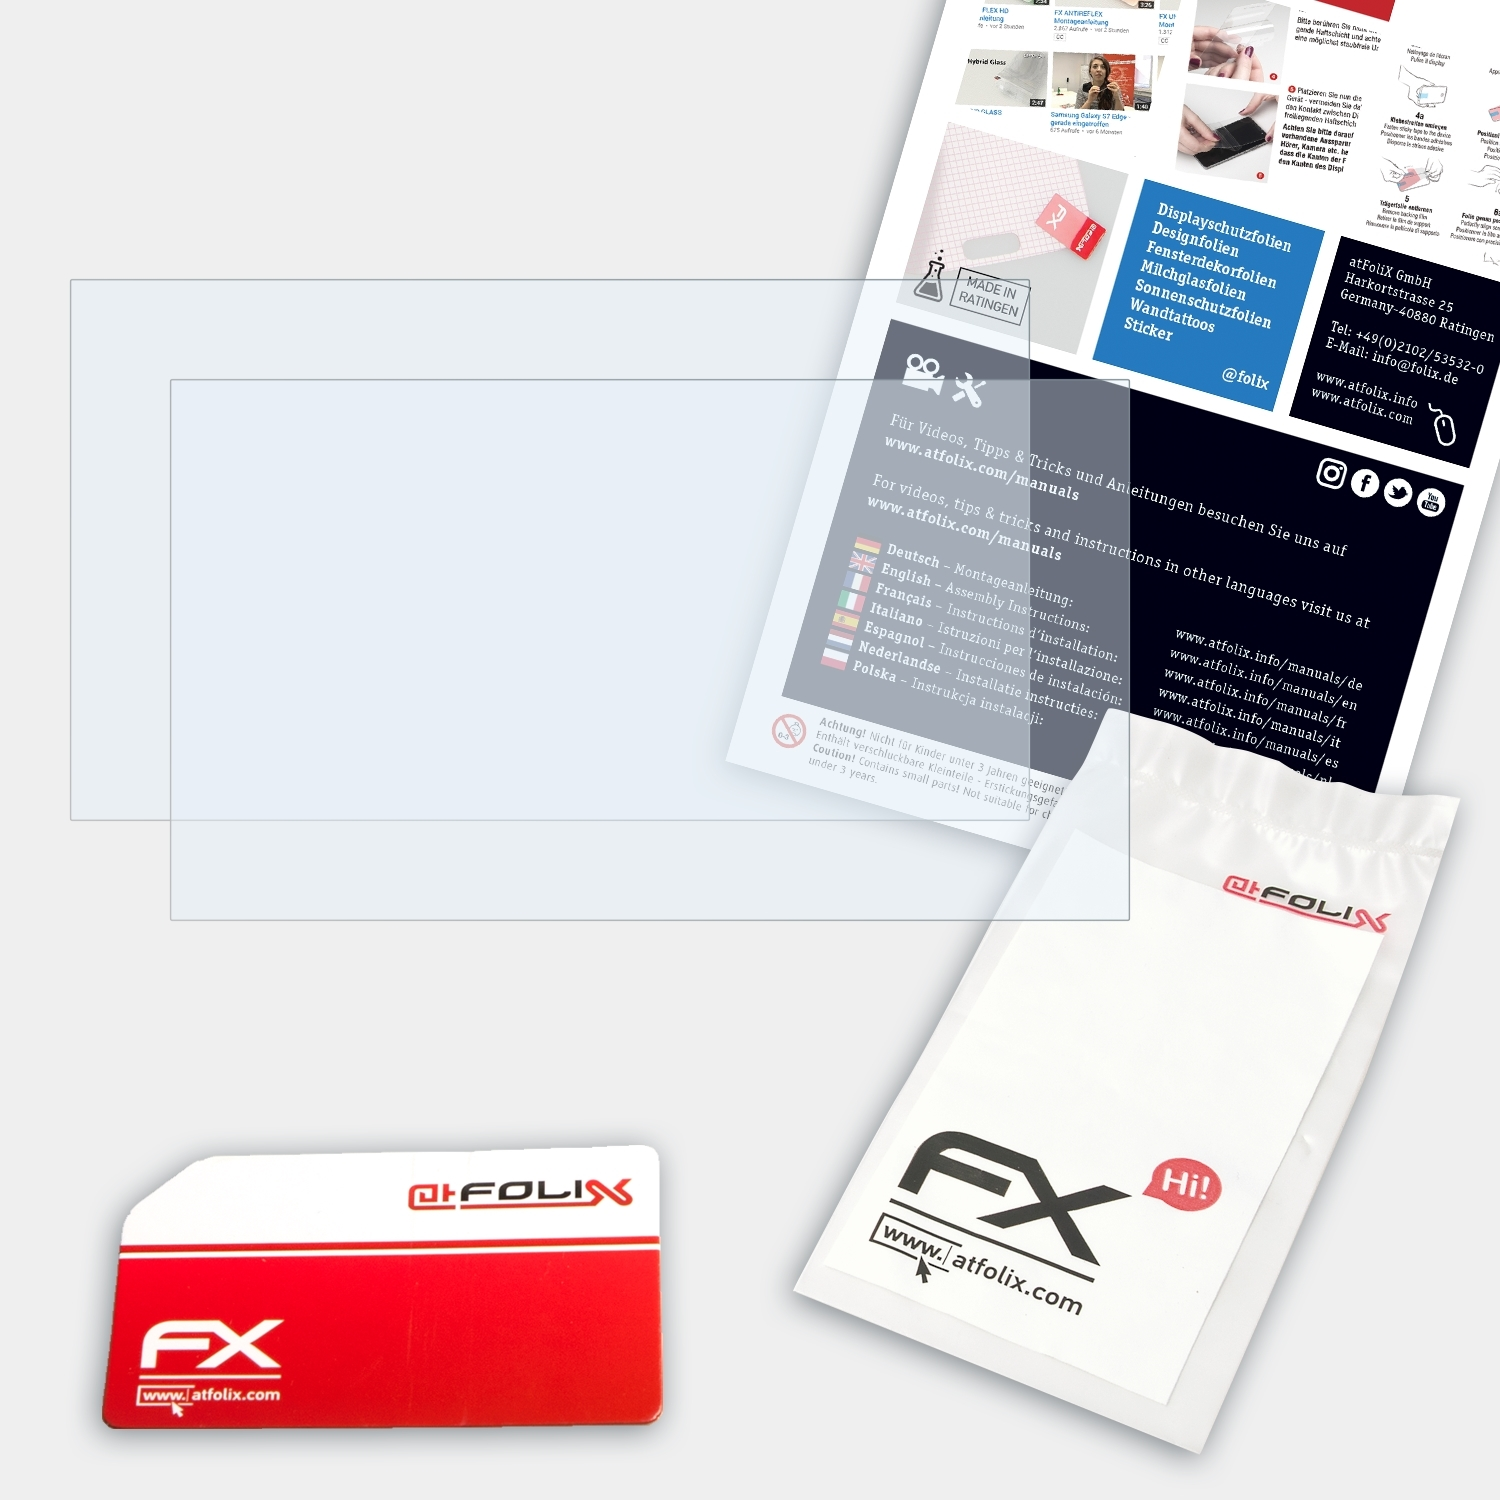 ATFOLIX 2x E495) Displayschutz(für ThinkPad Lenovo FX-Clear